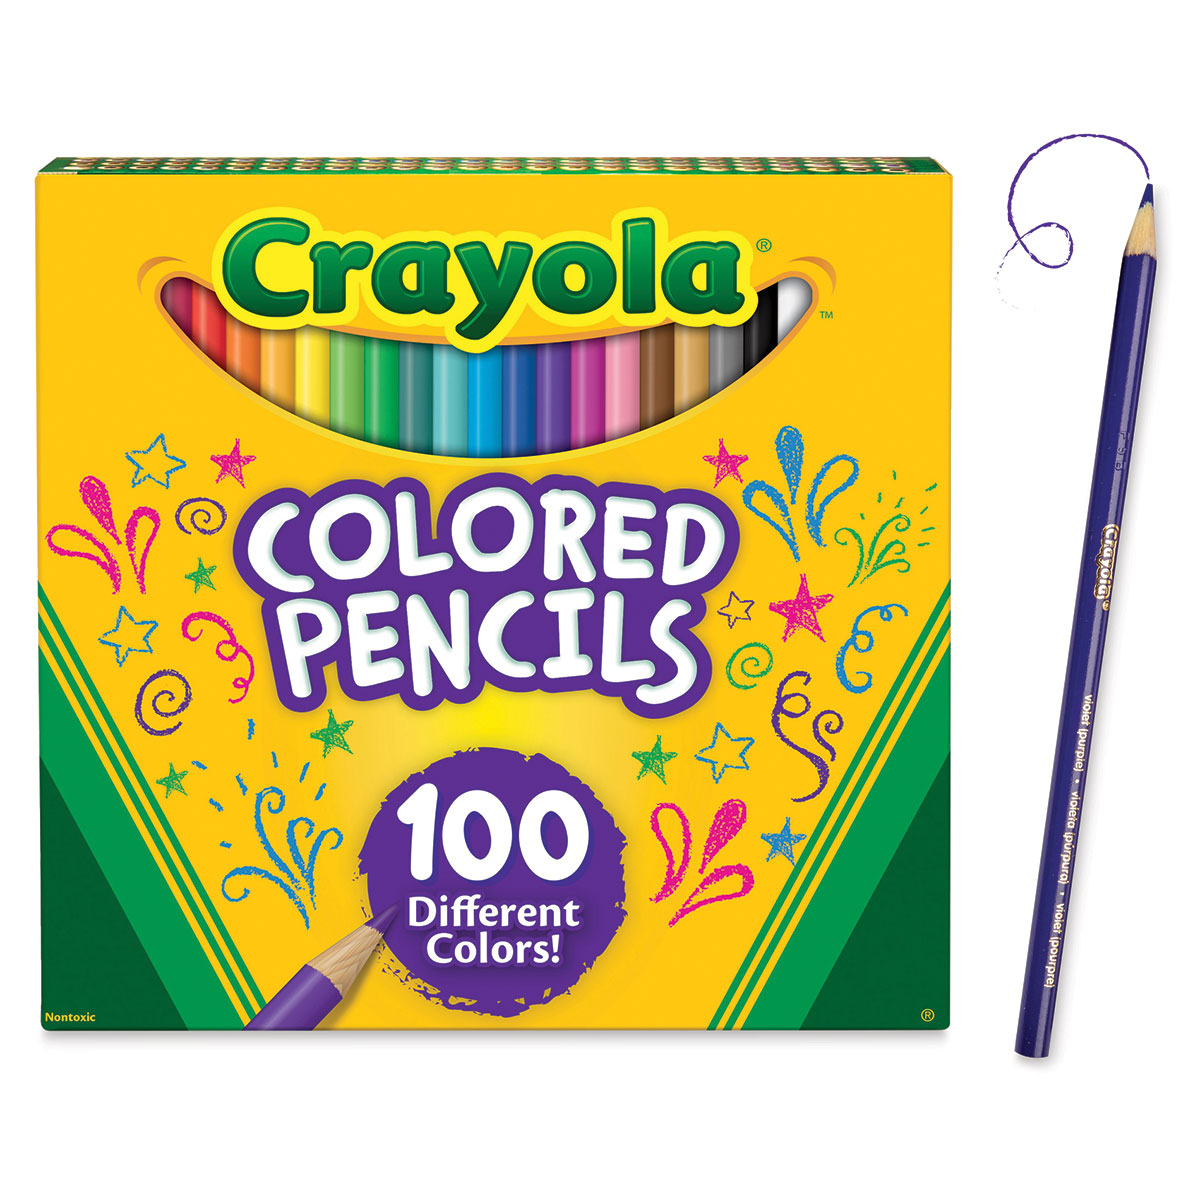 Crayola Color Pencils Assorted Colors Box Of 24 Color Pencils